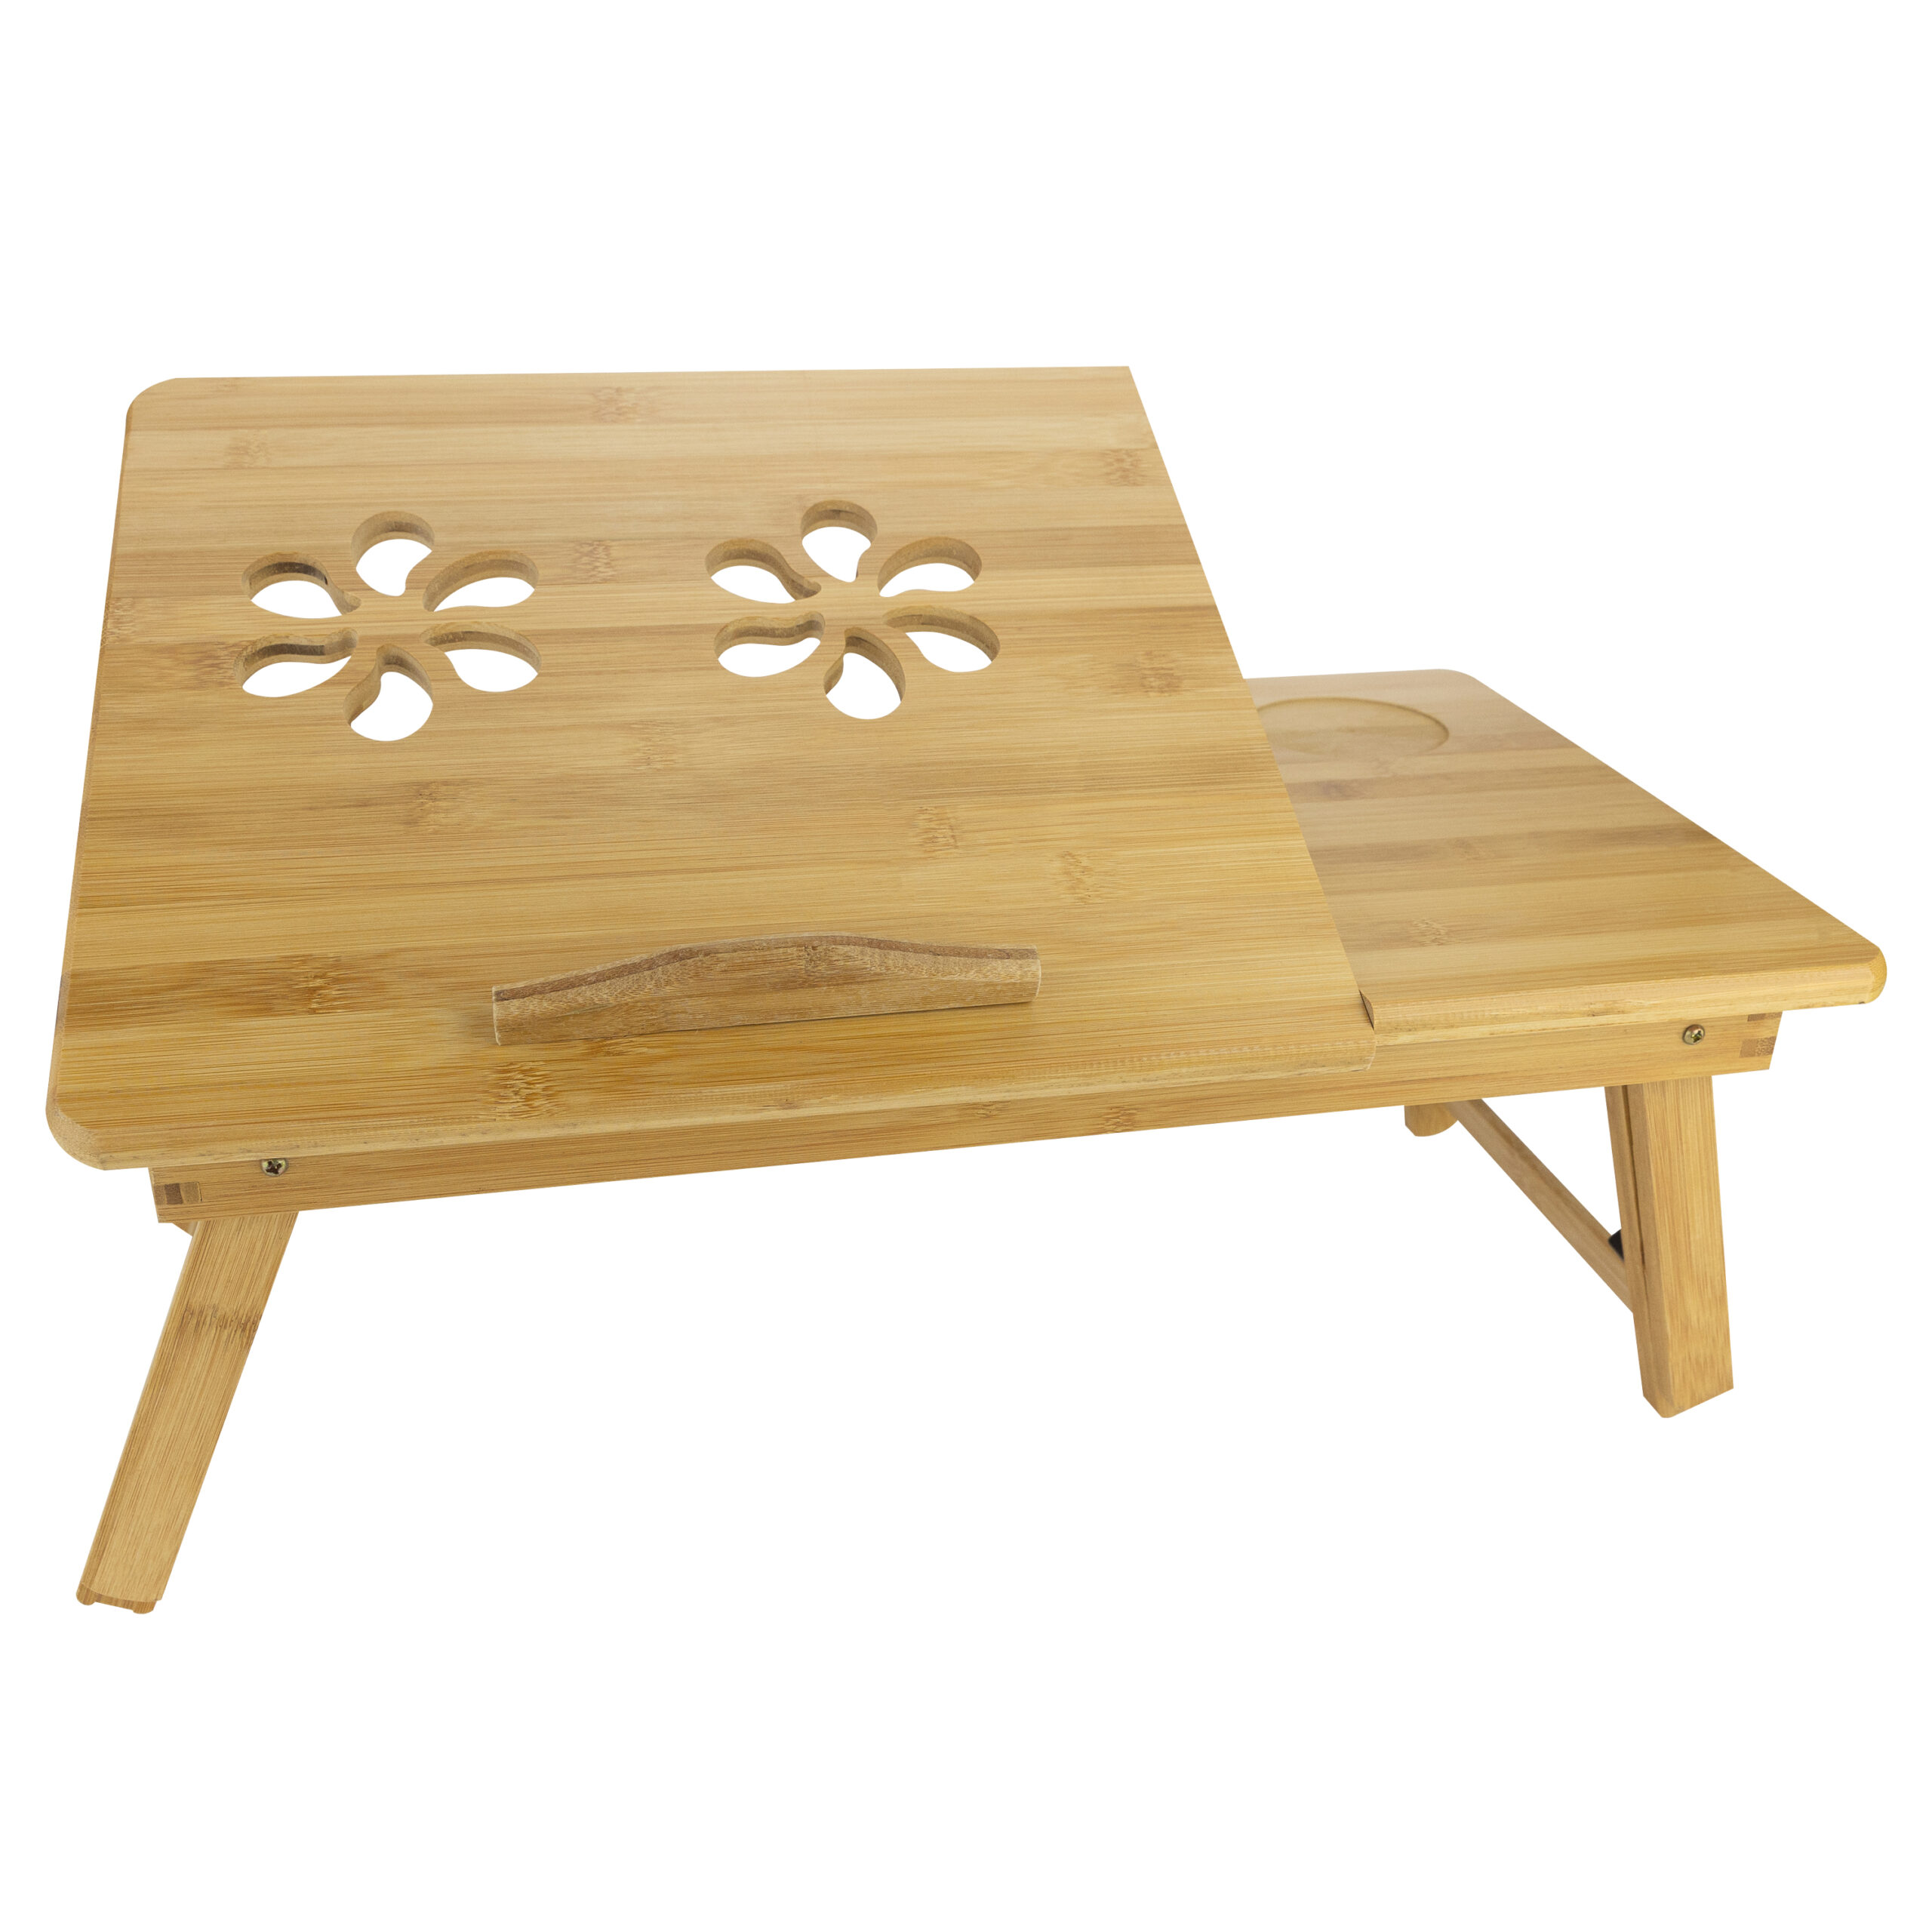 Drewniany składany stolik pod laptopa 7454_6